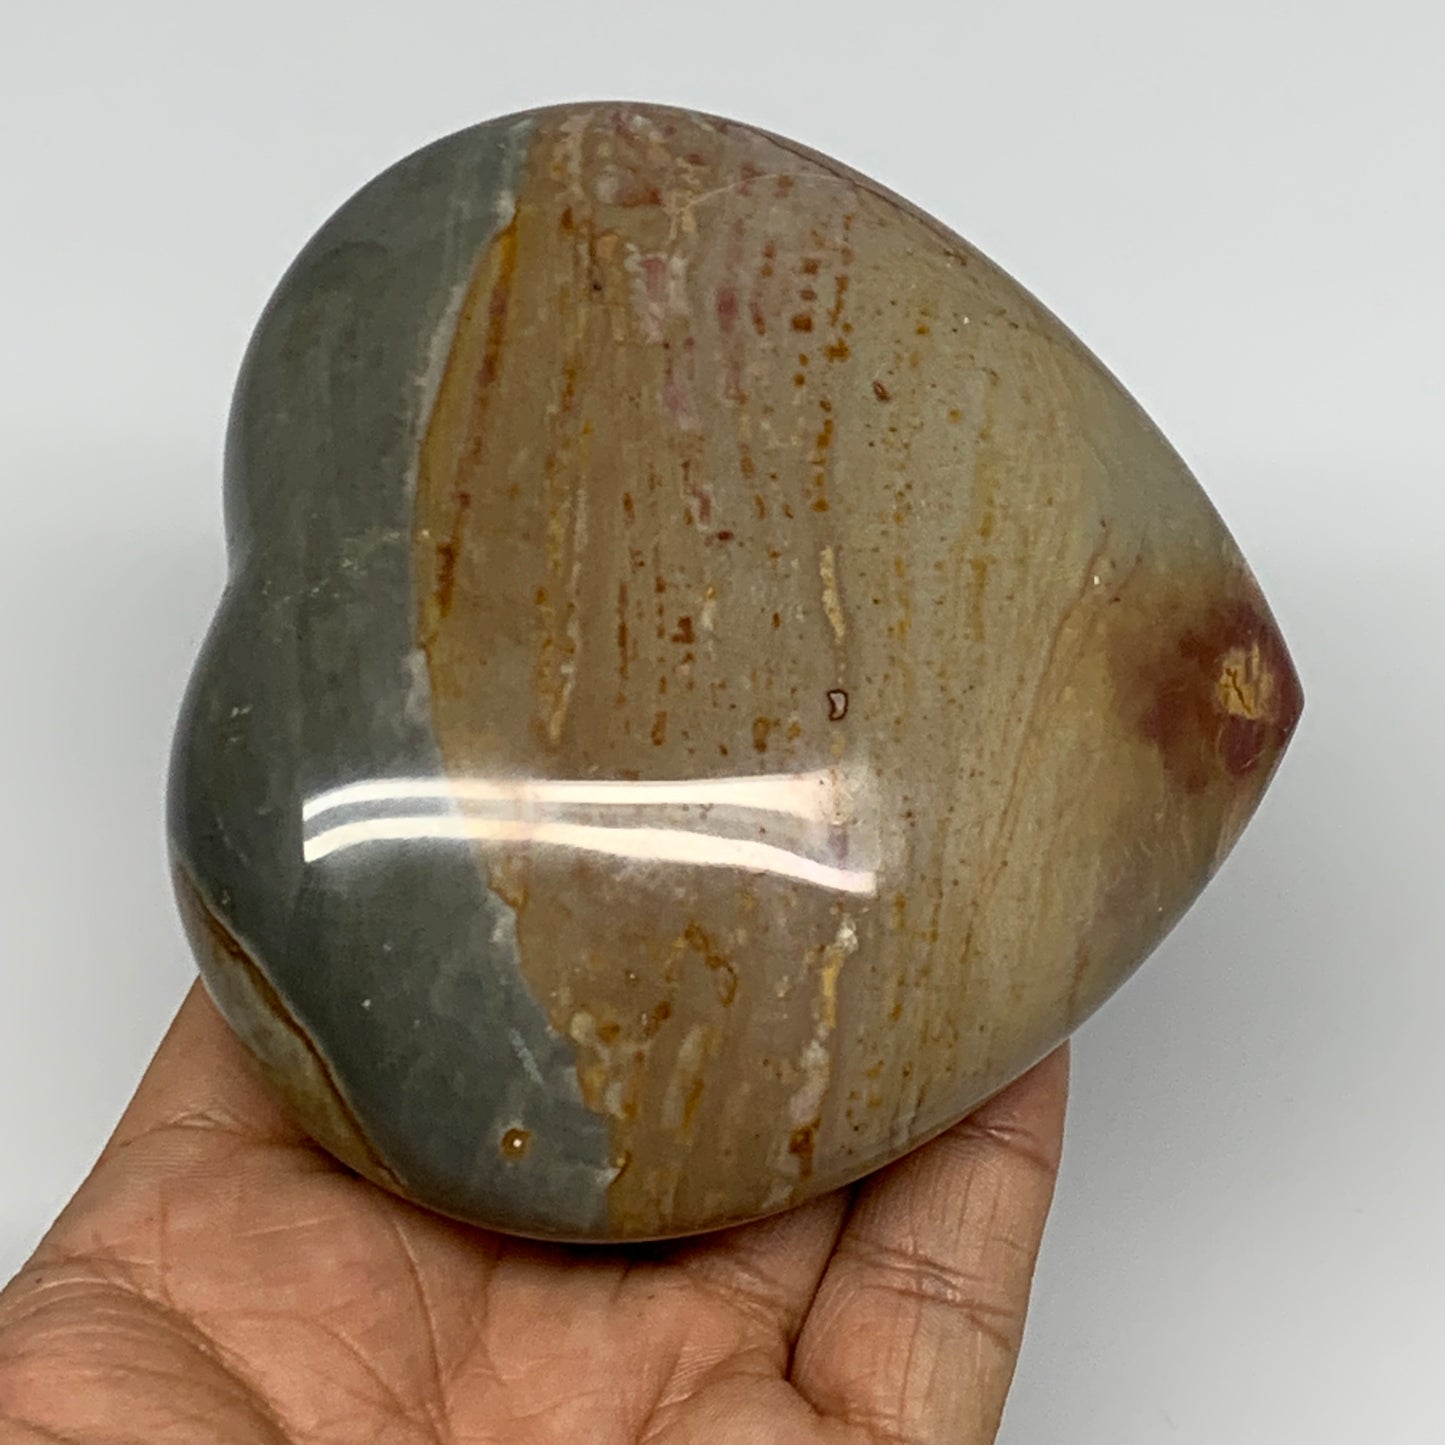 443.7g, 3.5"x3.9"x1.5" Polychrome Jasper Heart Polished Healing Crystal, B17718